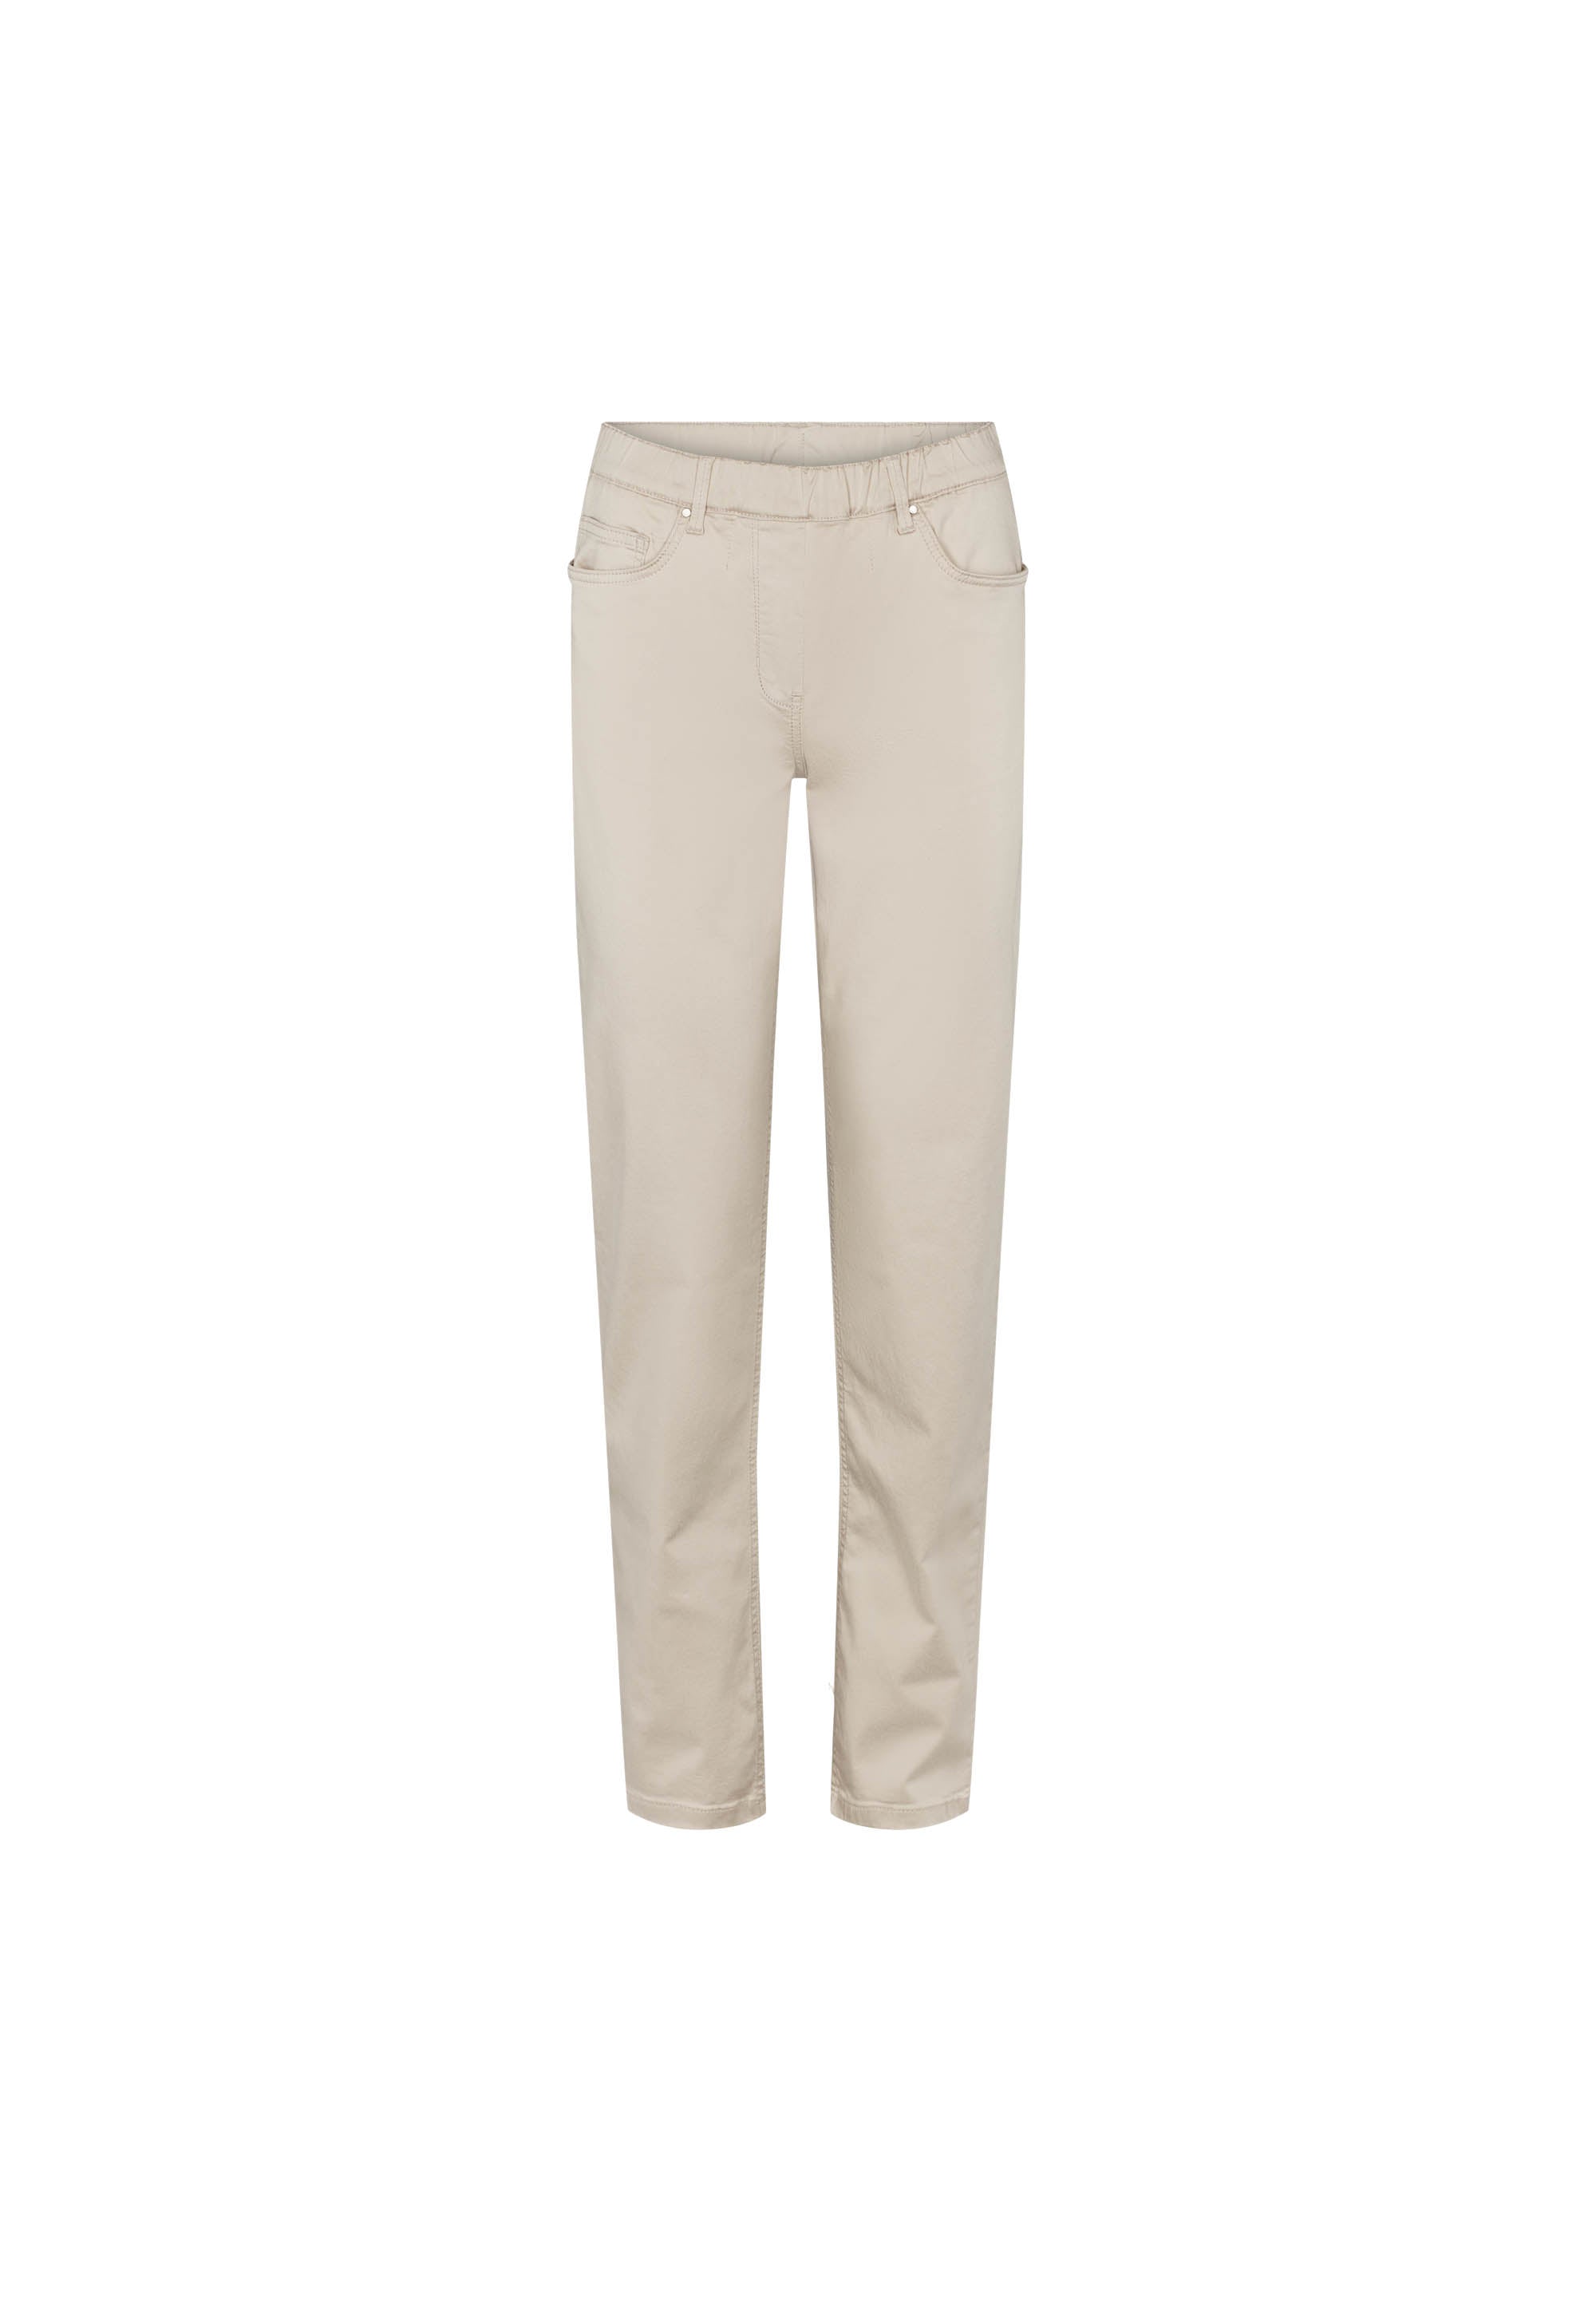 LAURIE Hannah Regular - Medium Length Trousers REGULAR Grau sand